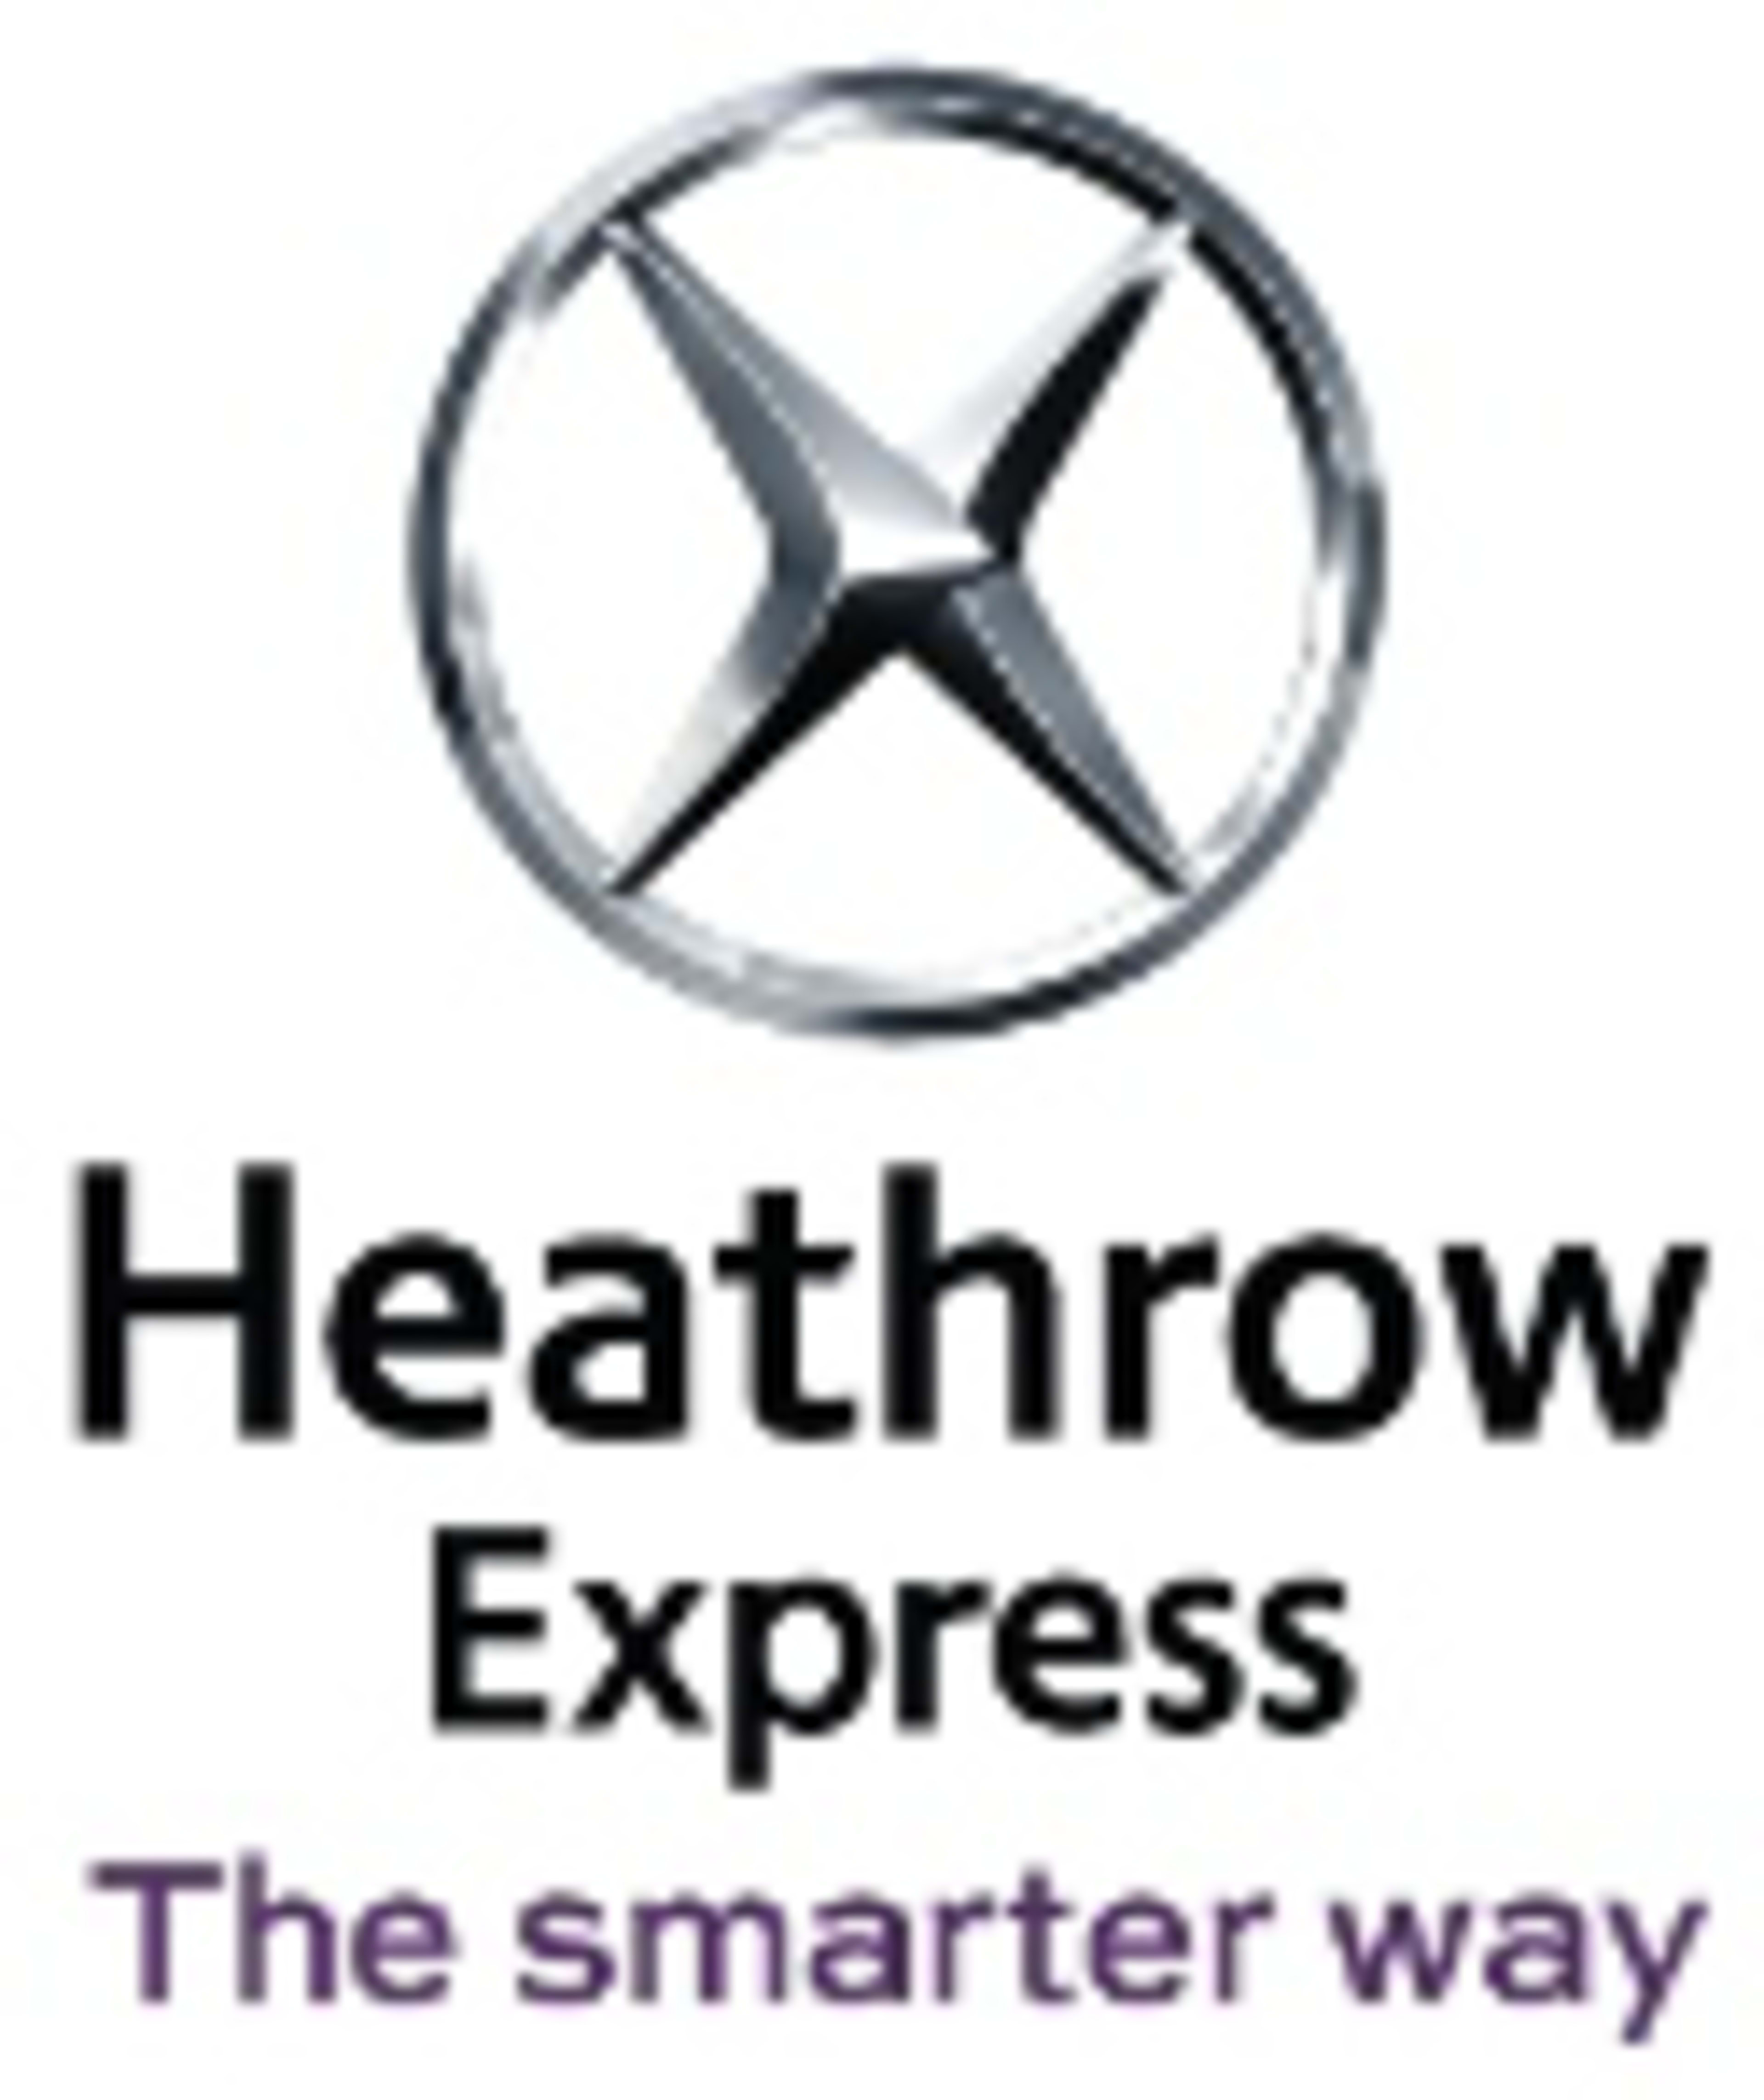 Heathrow Express Code